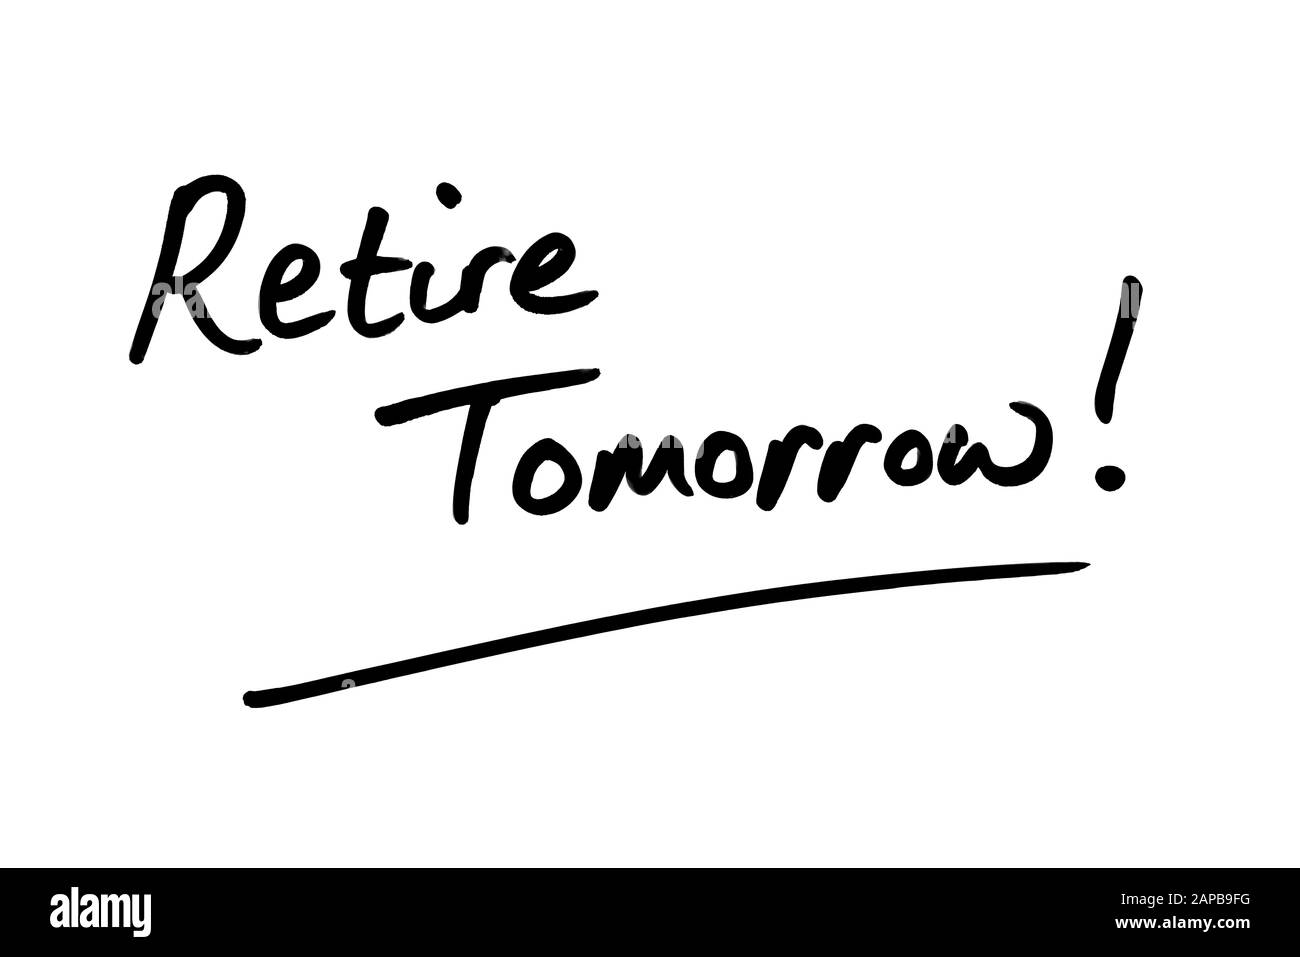 Retire Tomorrow handwritten on a white background. Stock Photo